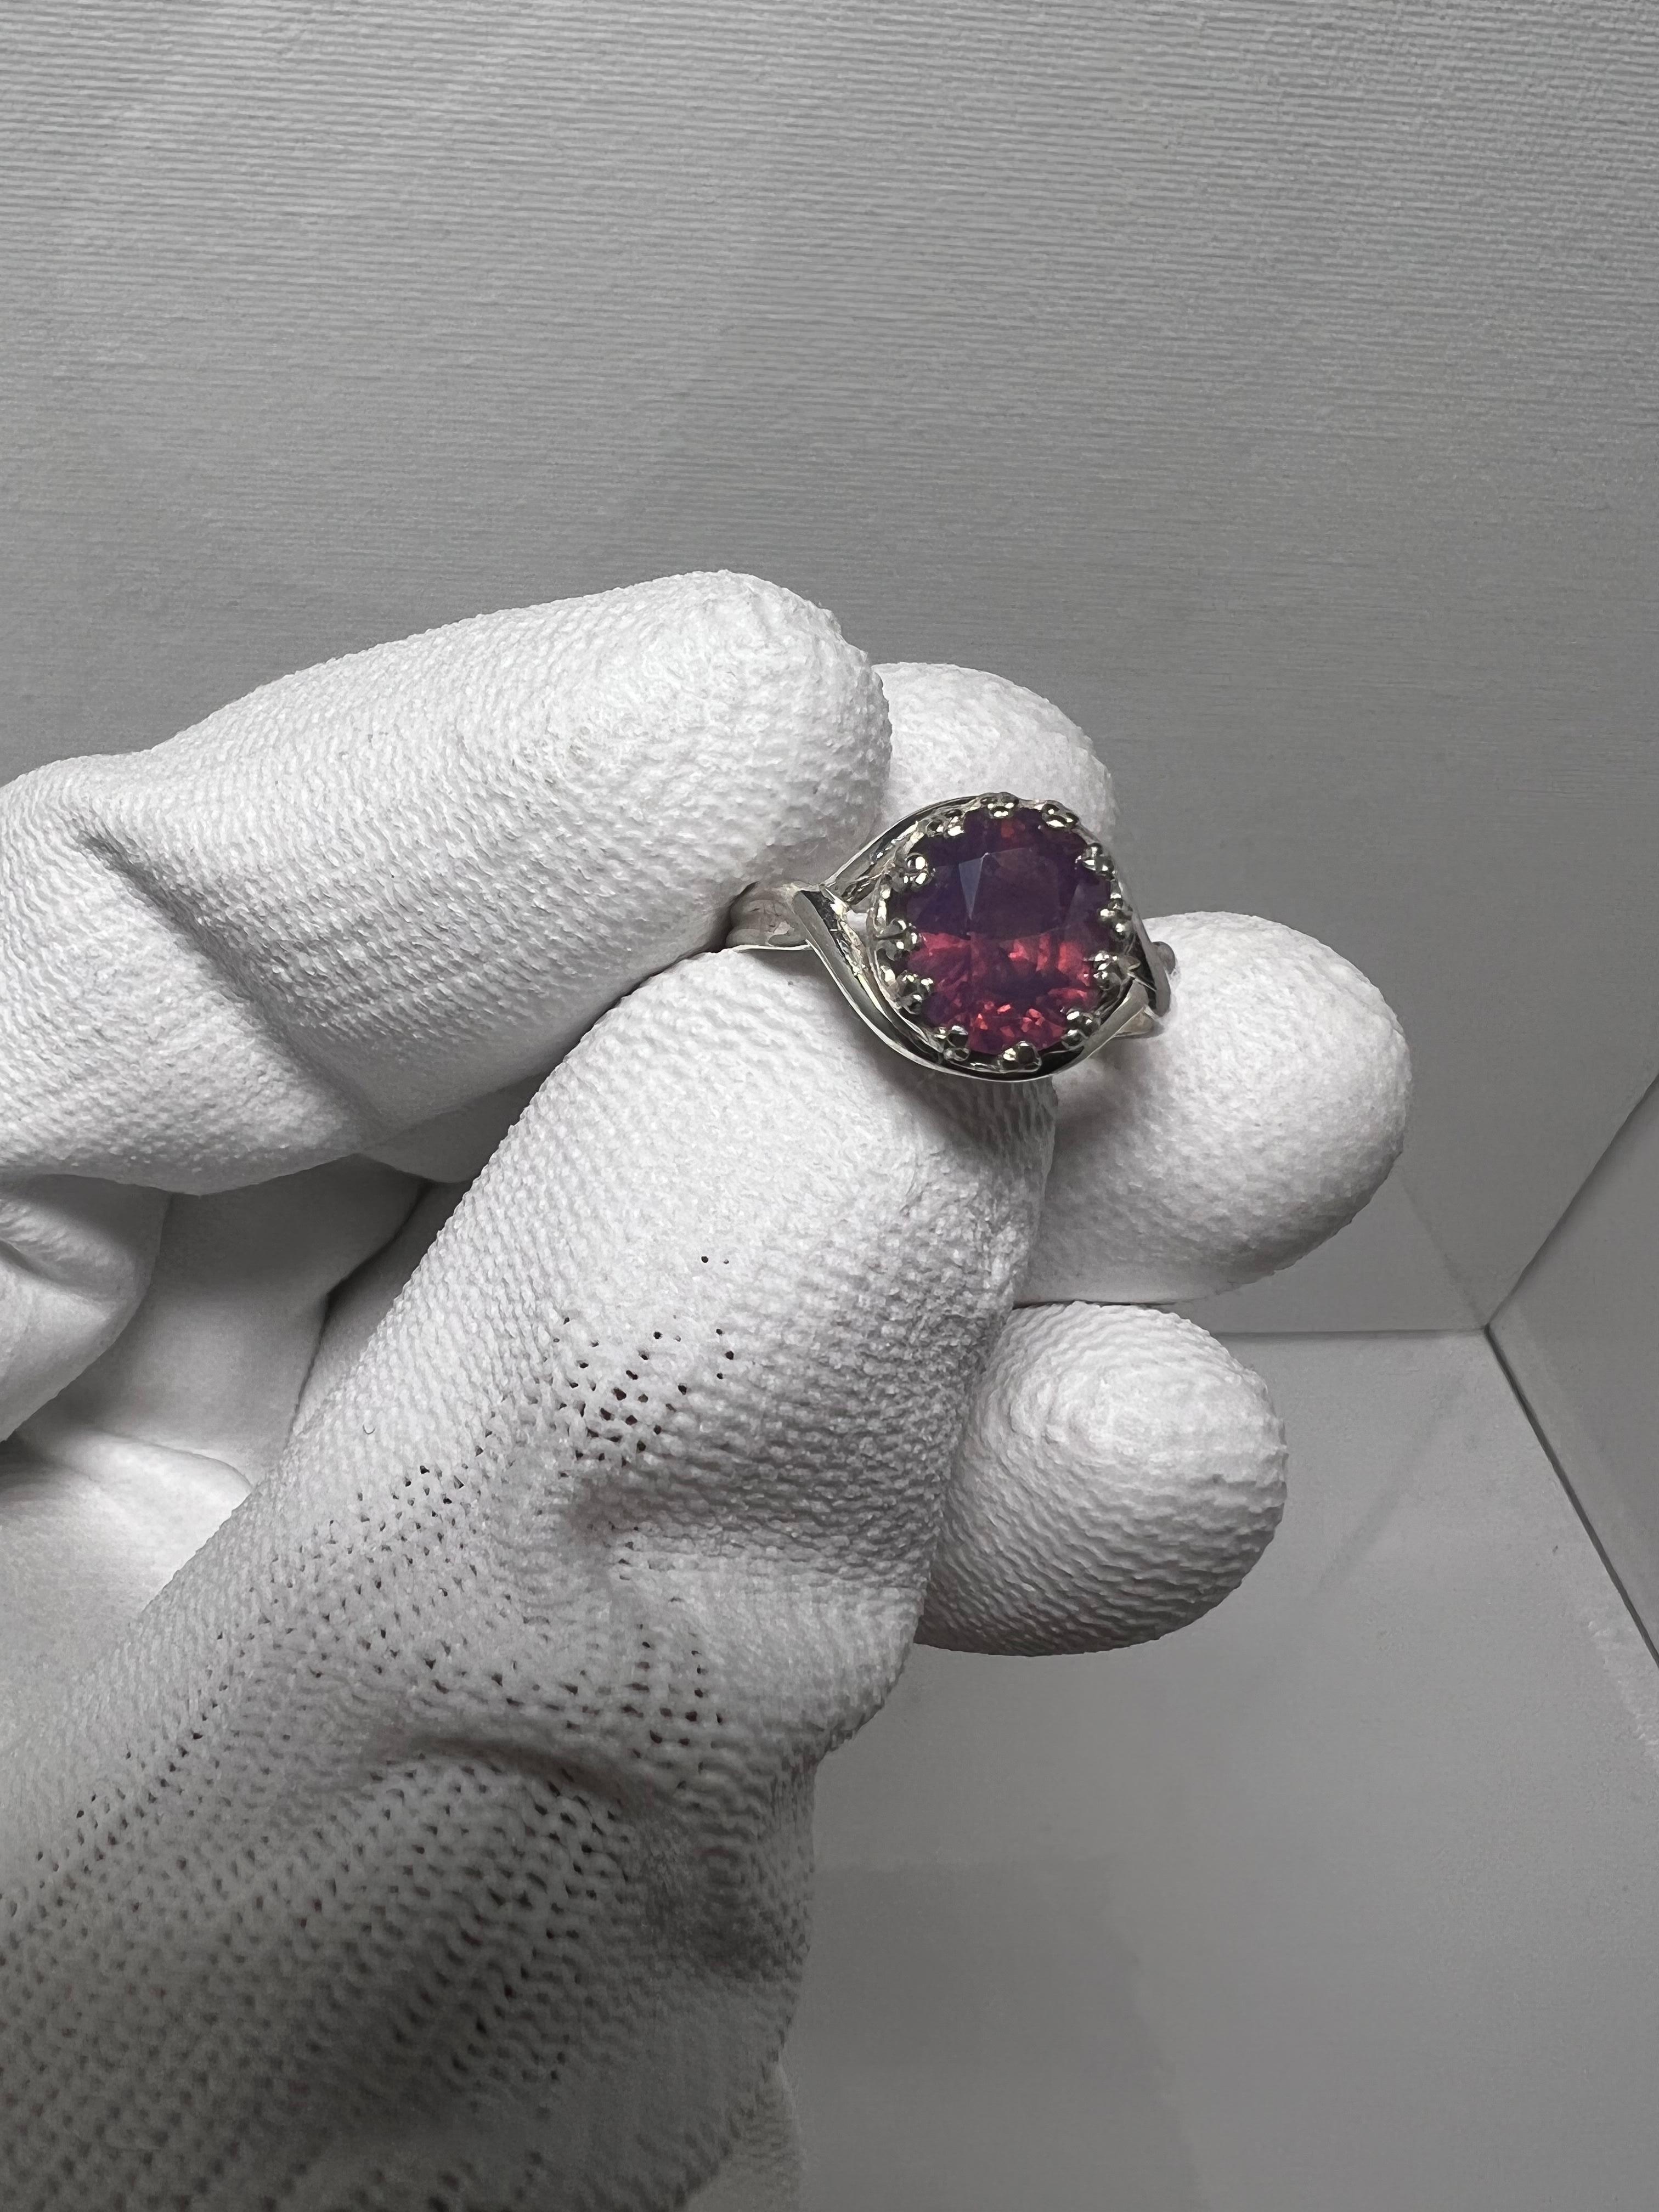 Oval Cut 3.5 Carat Vivid Reddish Pink with Blue Hue Kashmir Sapphire Silver Ring